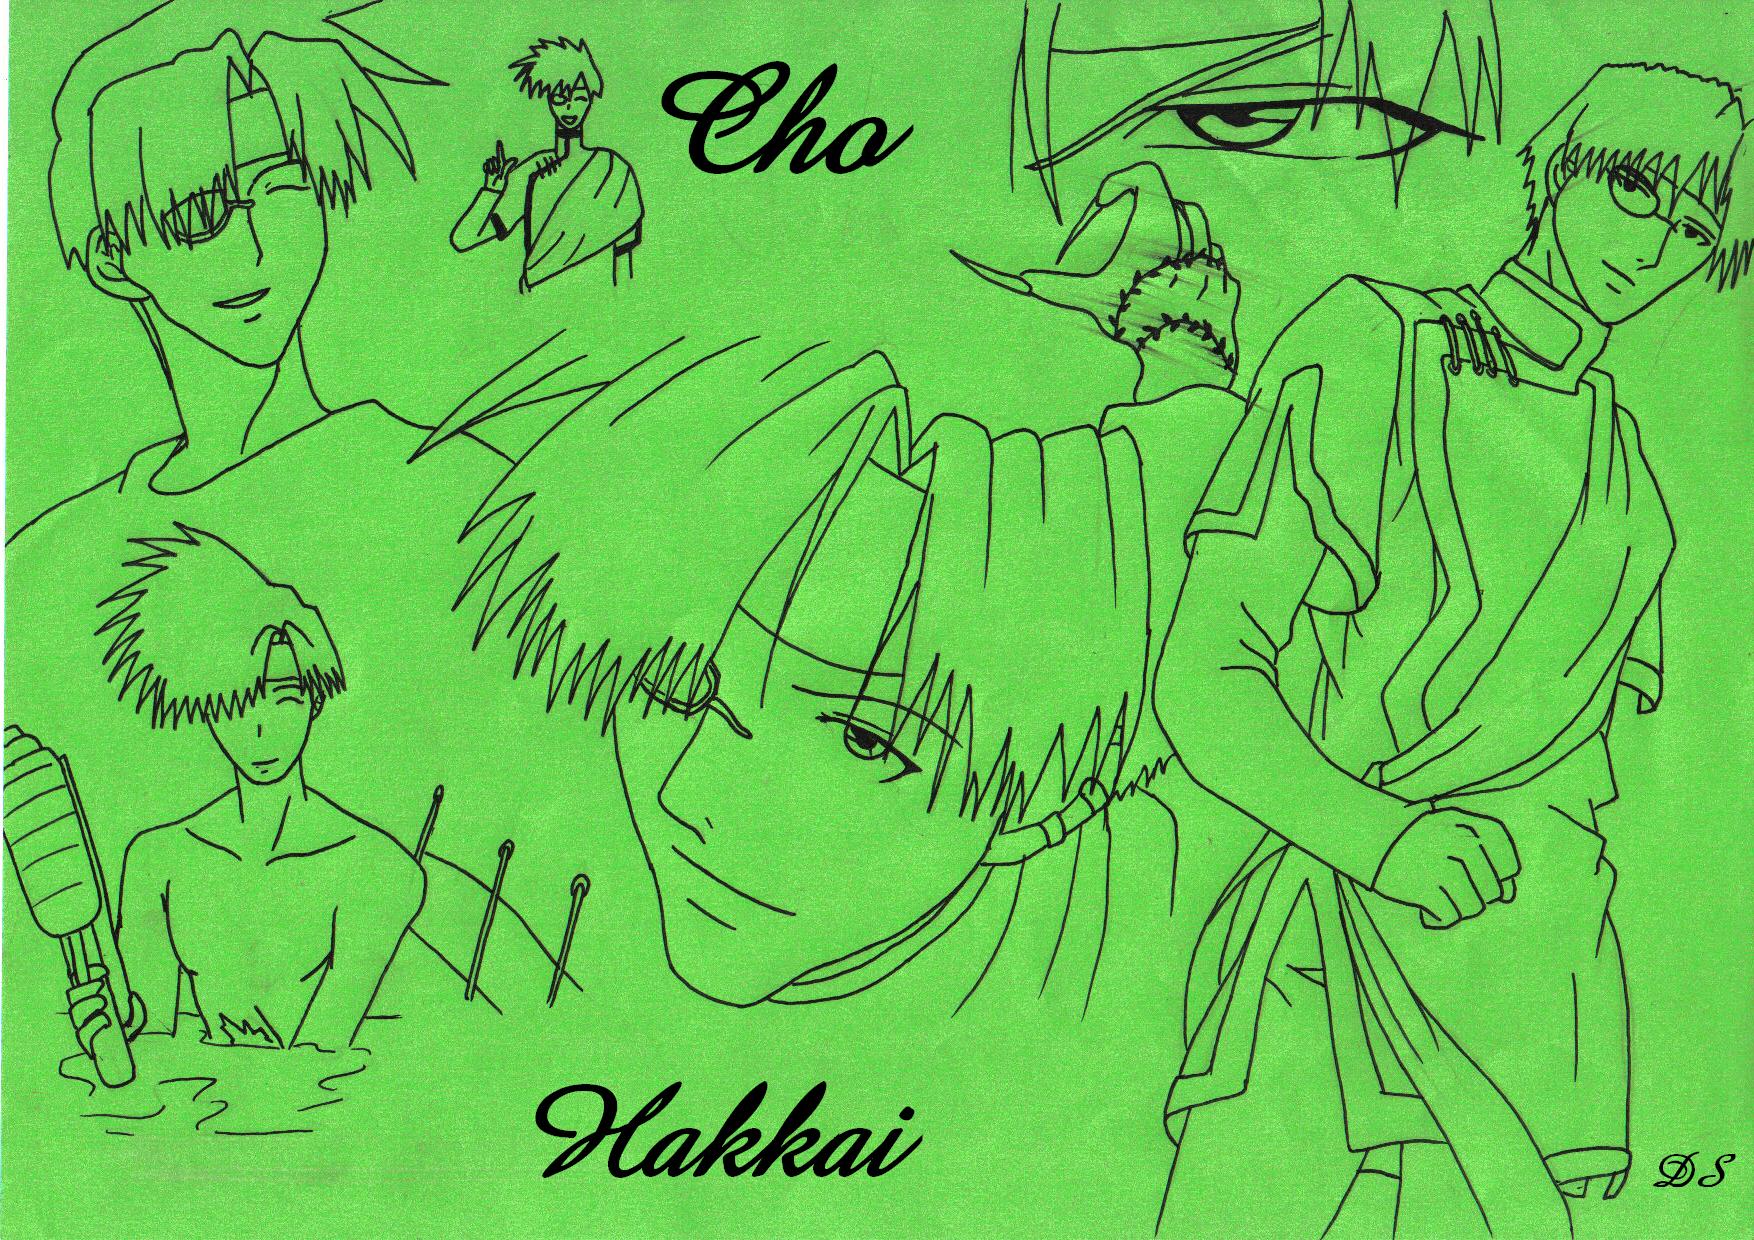 Cho Hakkai; a tribute to by Darker_Shadow